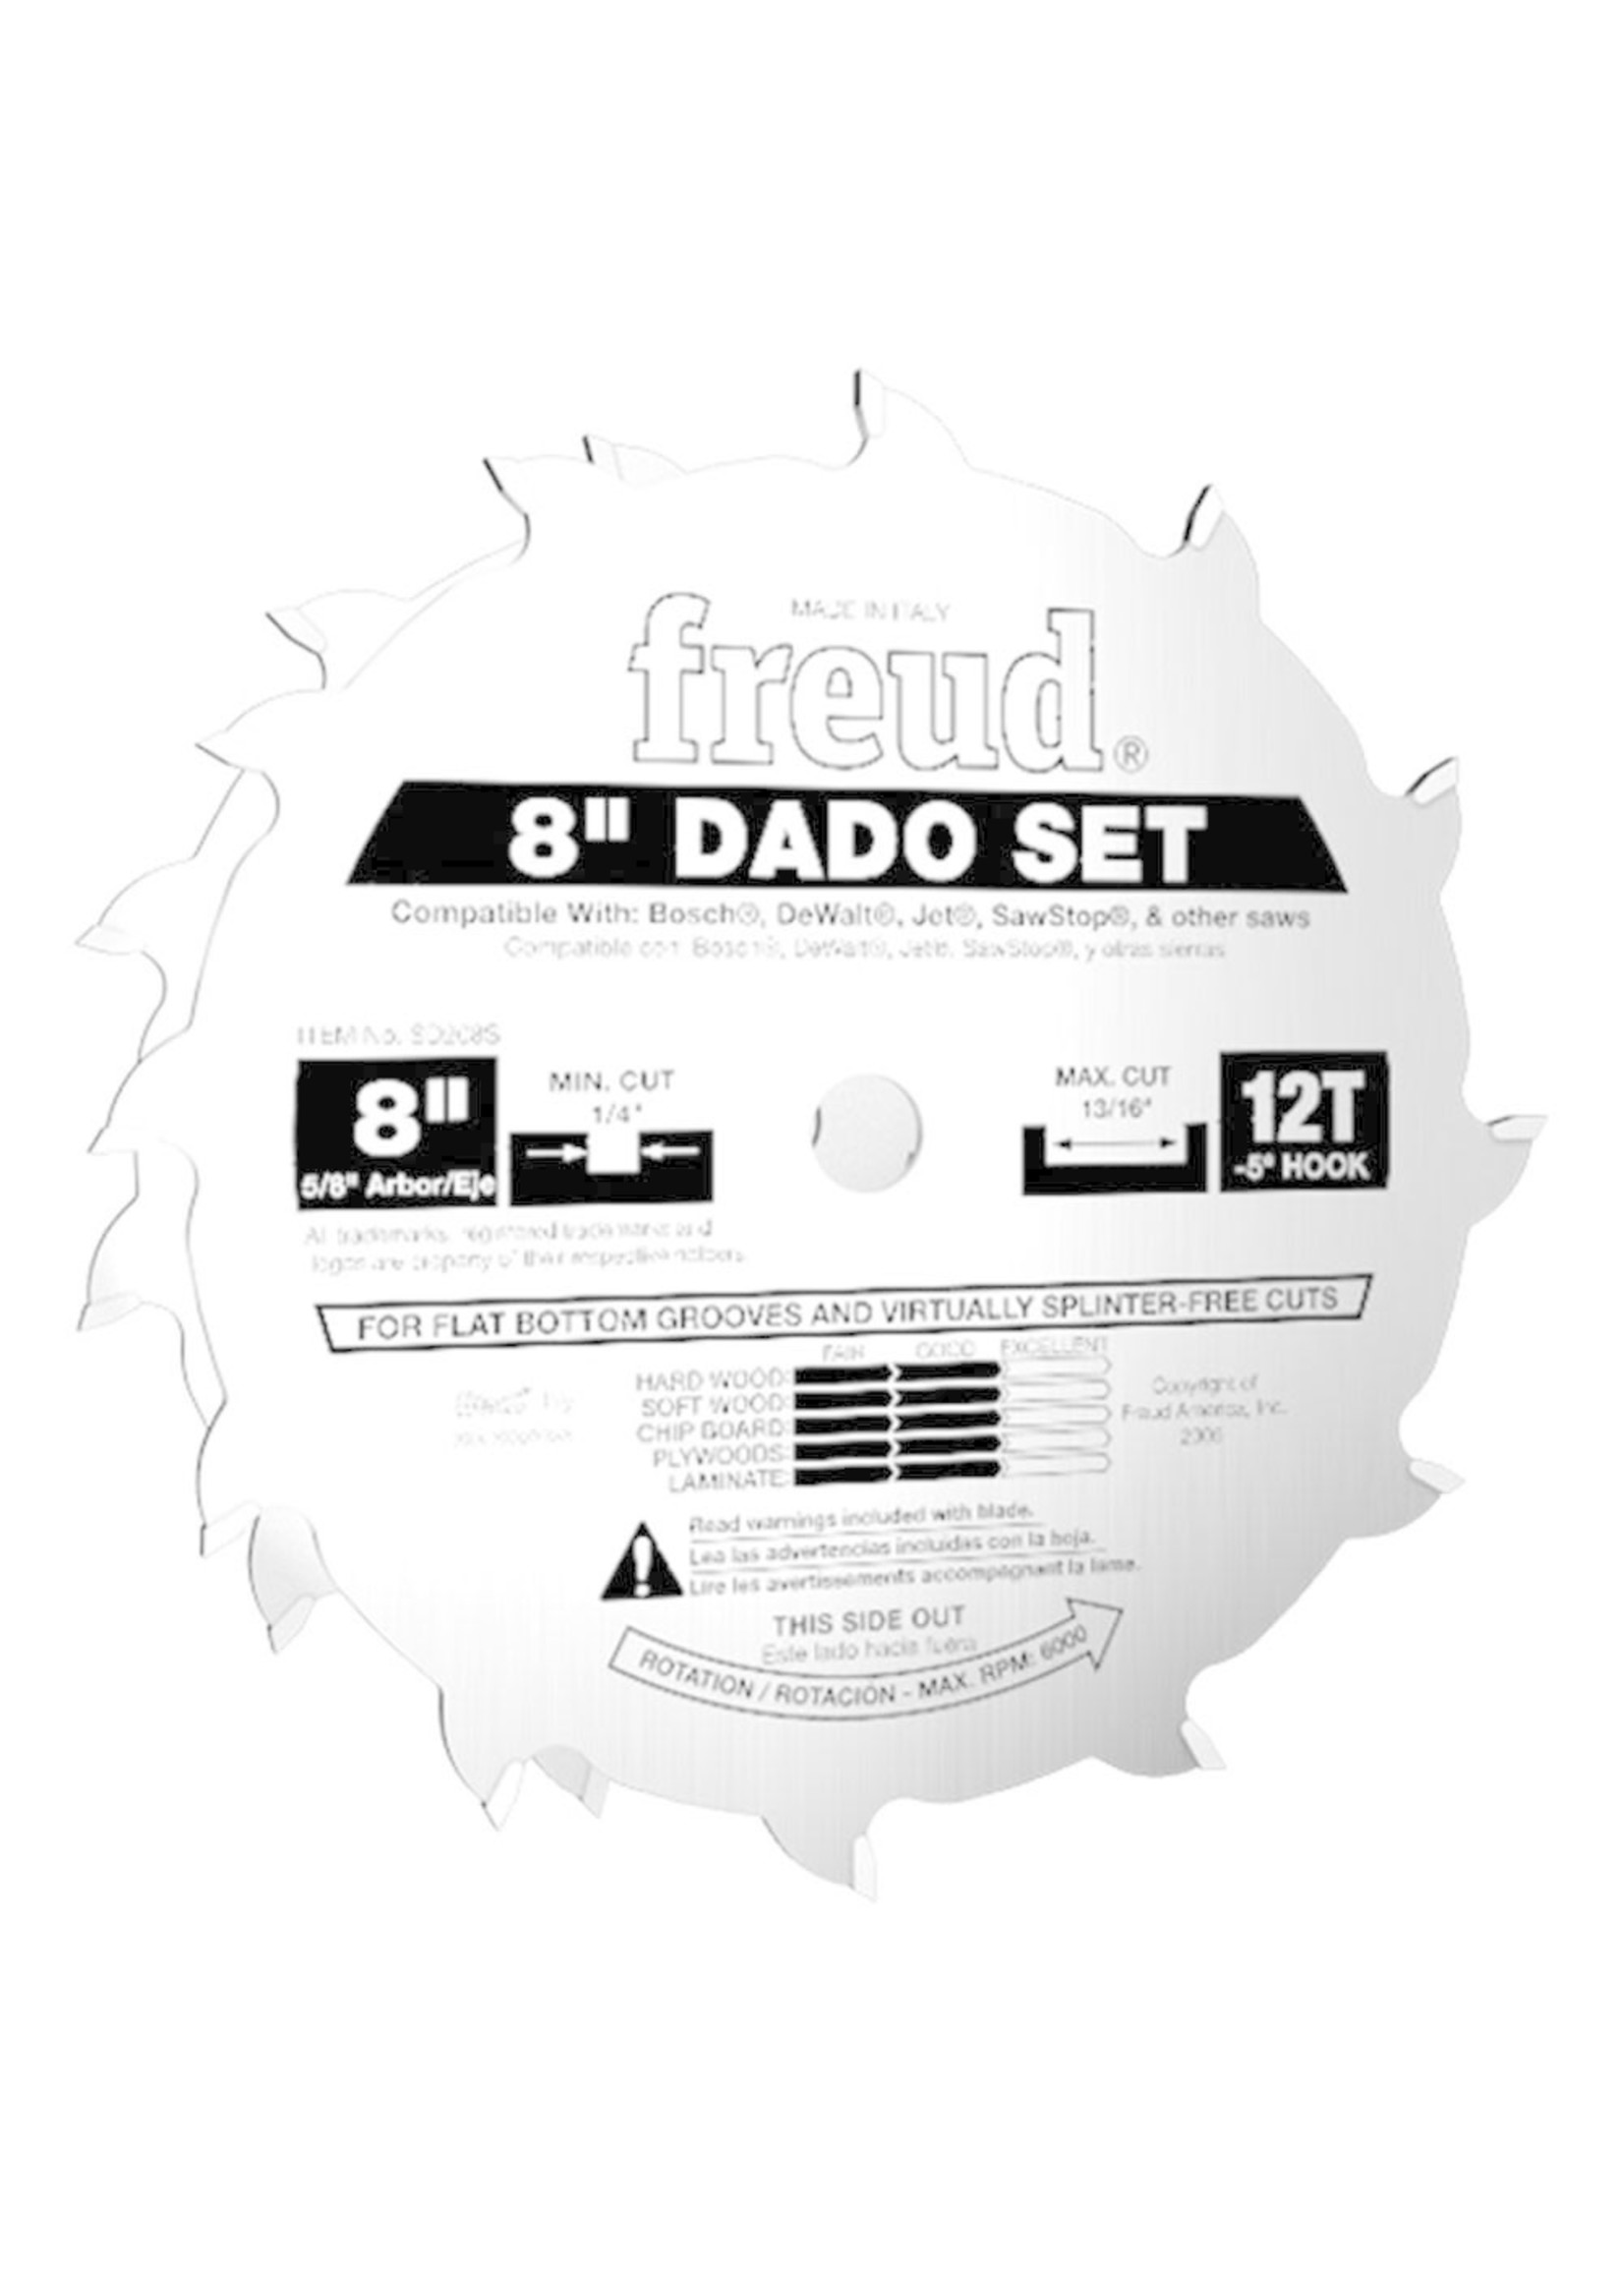 Freud/Diablo 8" Pro Dado Set SD208S